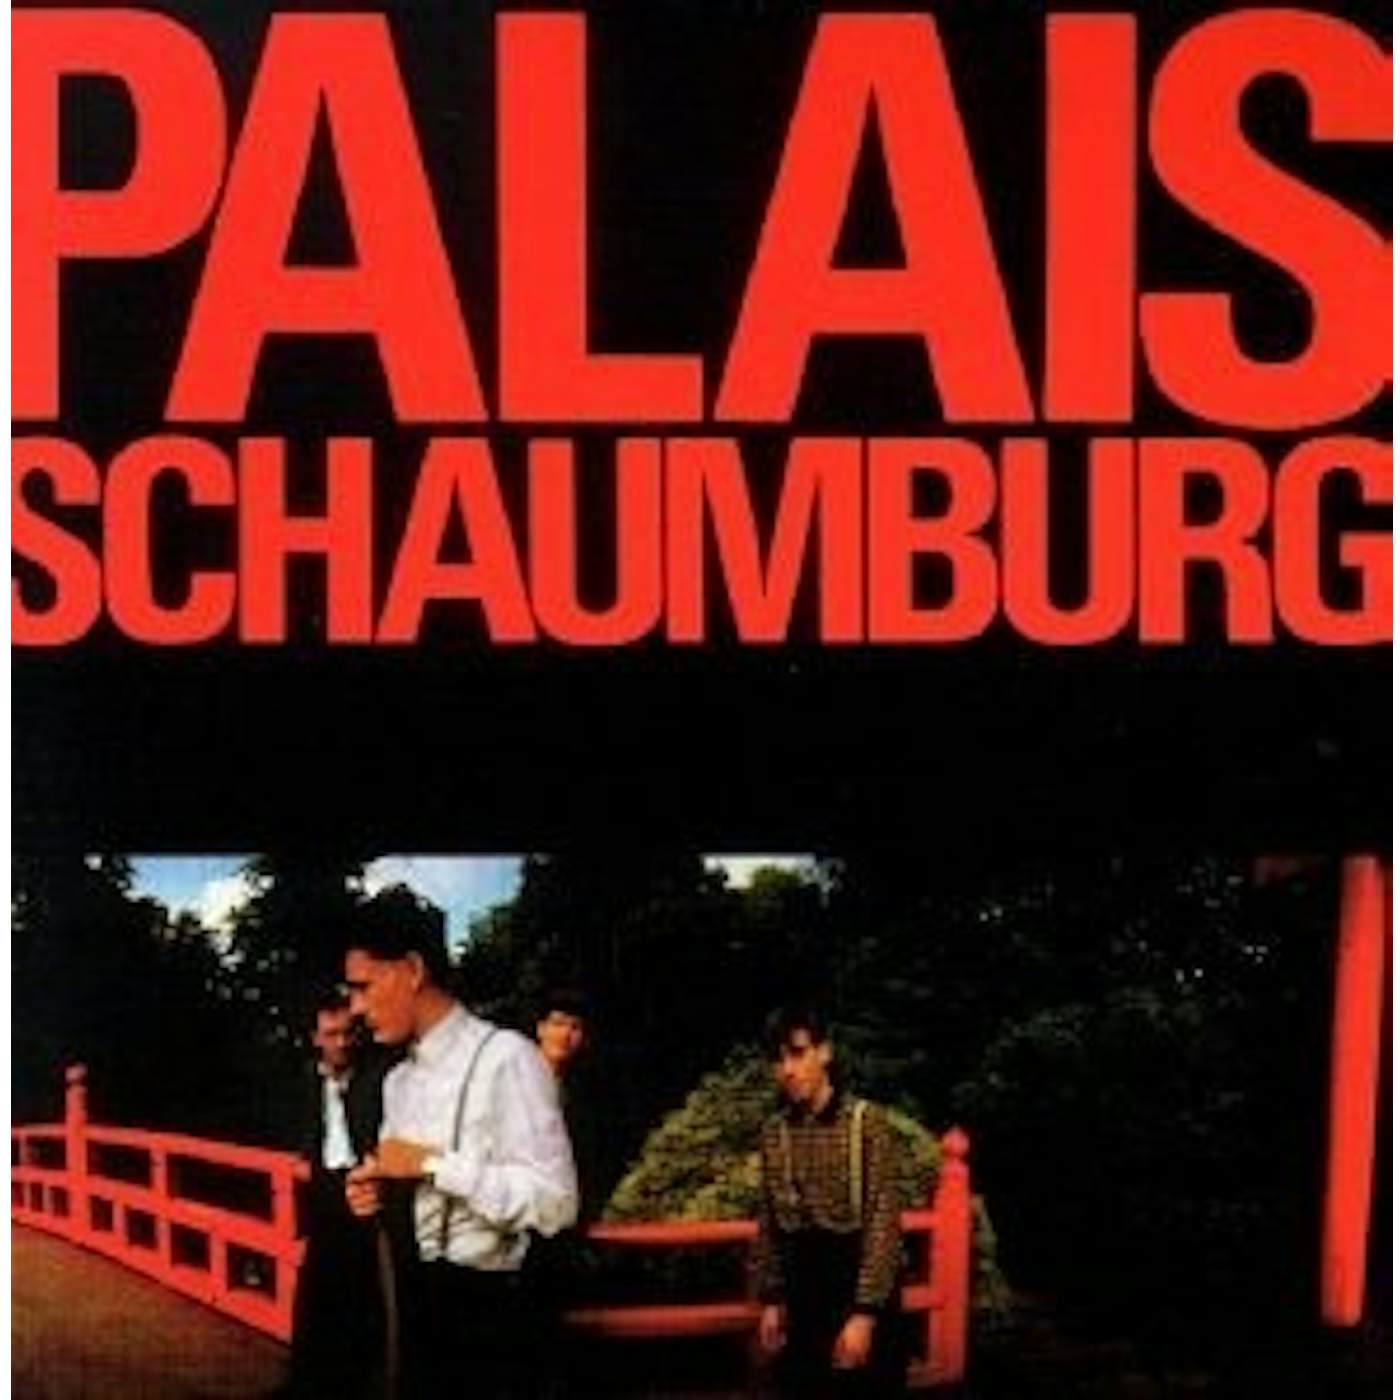 Palais Schaumburg Vinyl Record